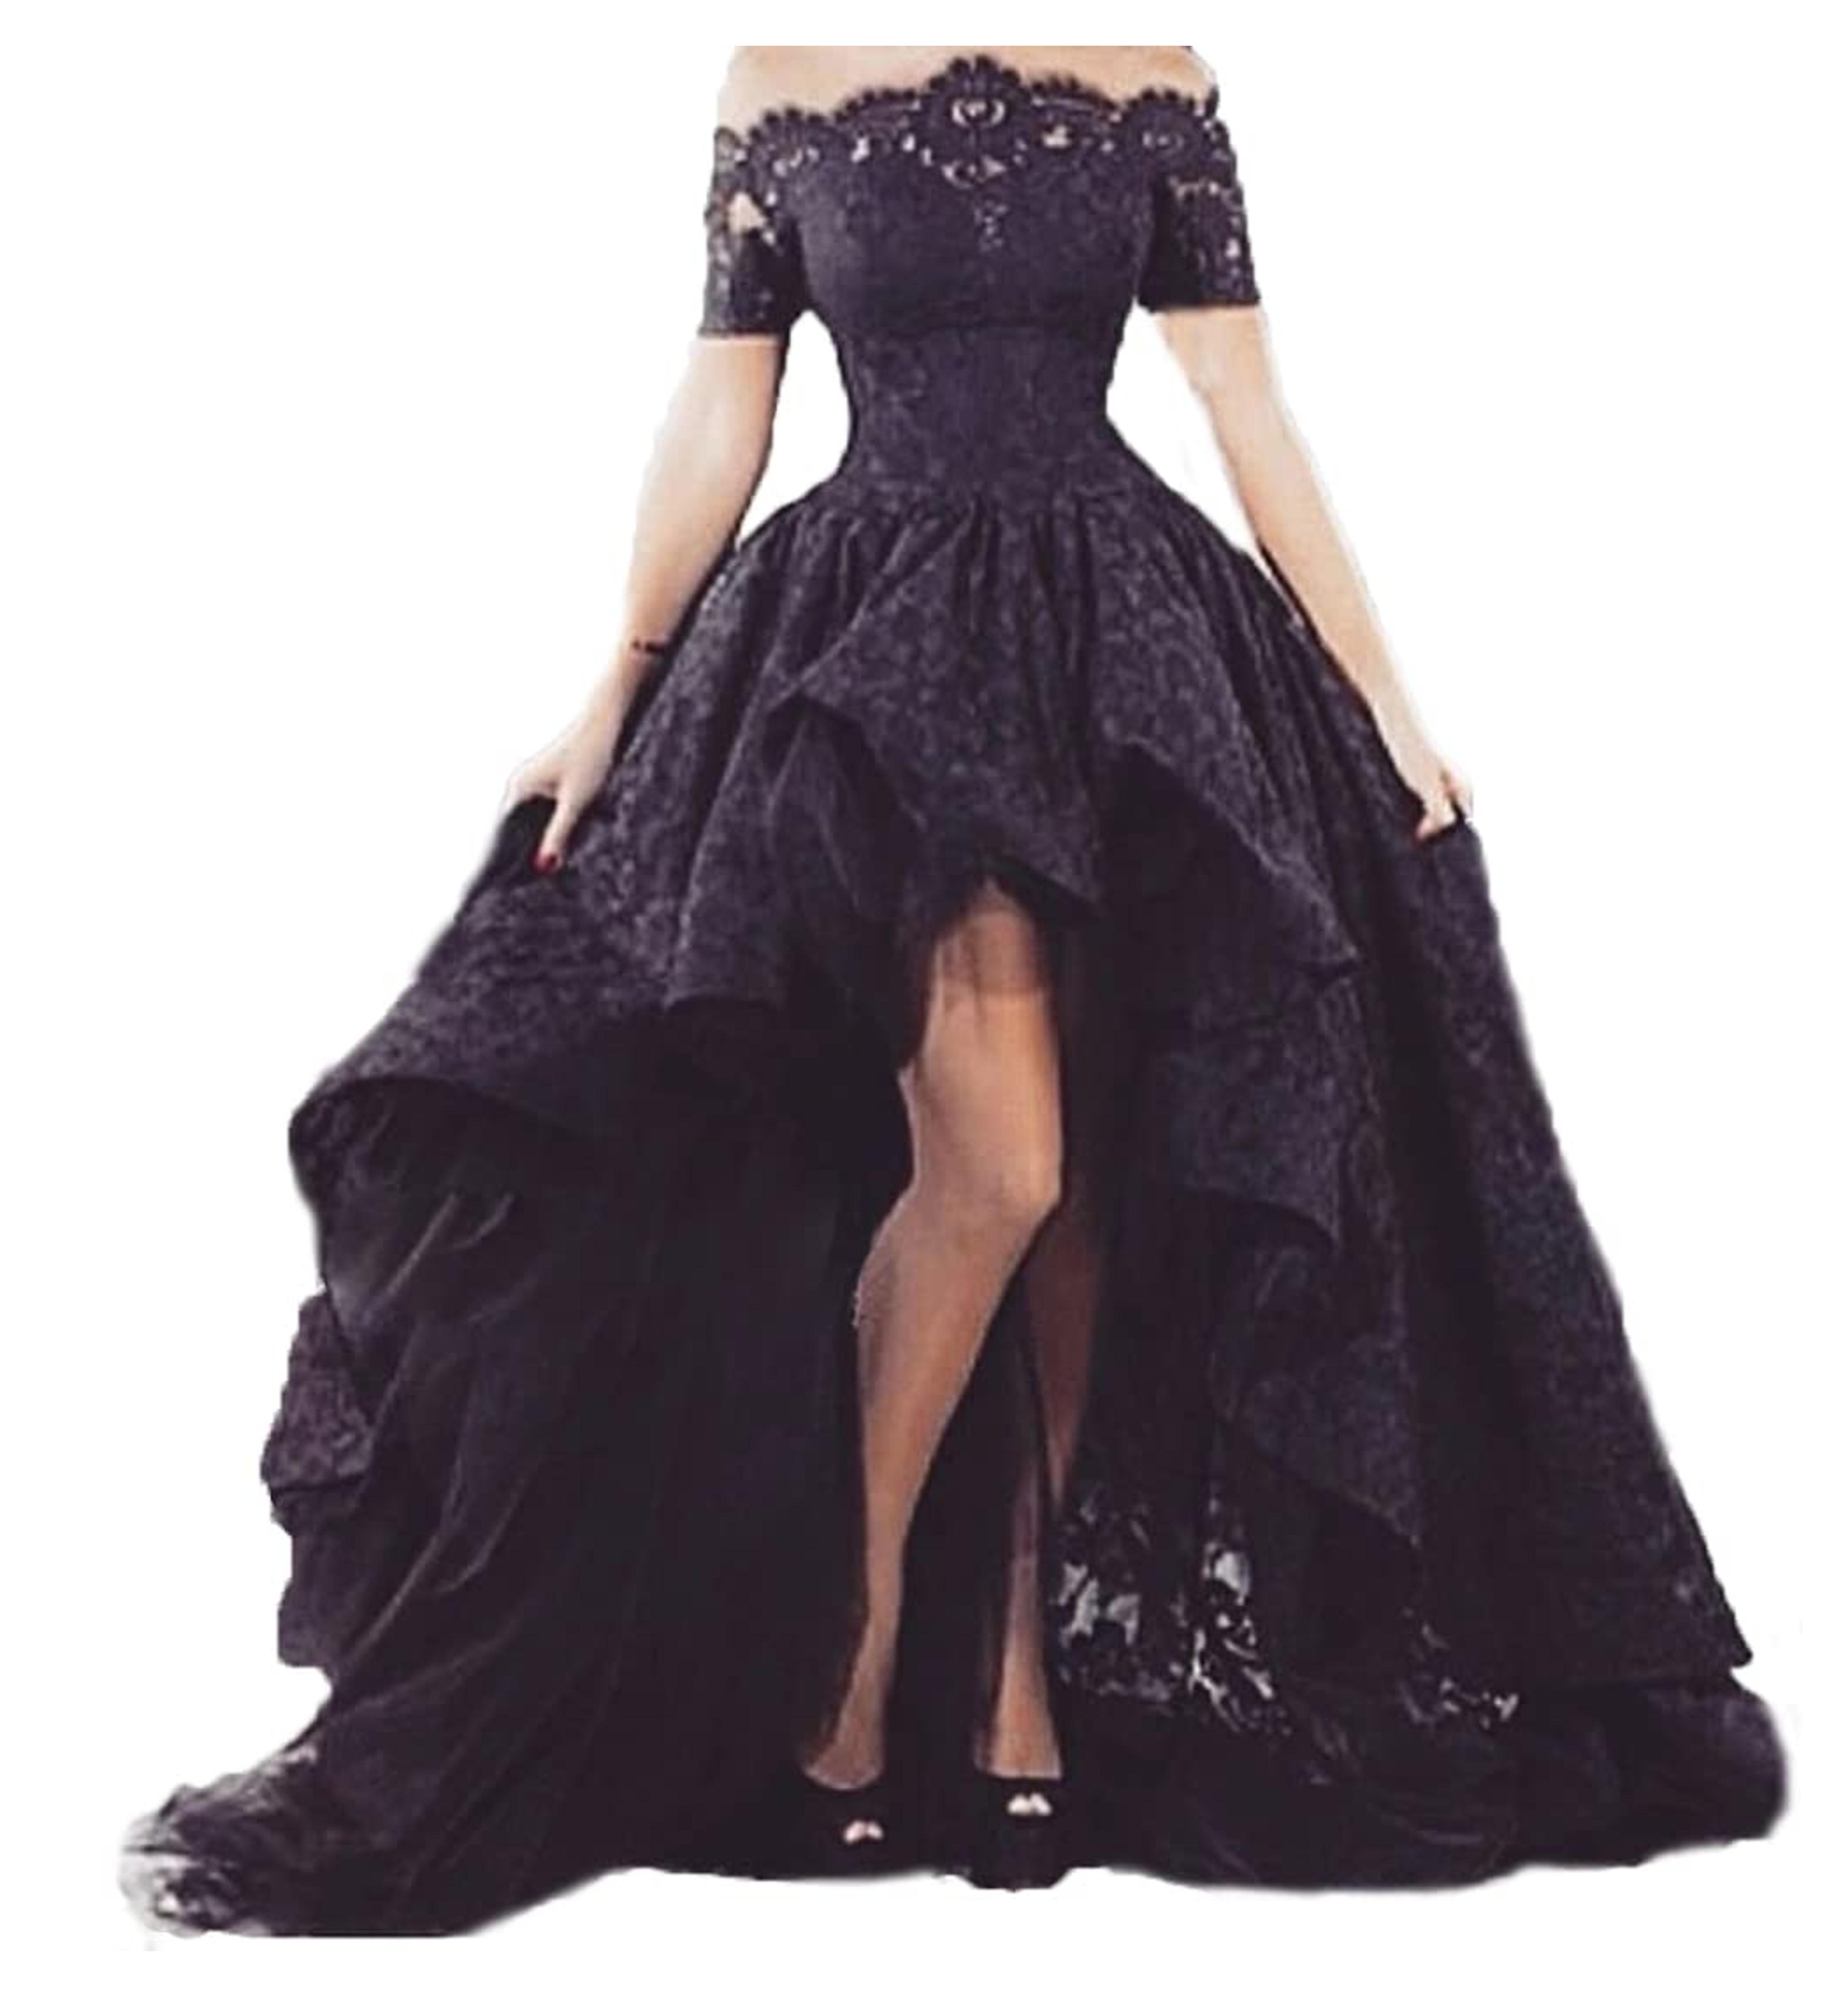 Diandiai Off Shoulder Hi Lo Gothic Prom Dresses for Women Short Sleeve Lace Evening Dresses Plus Size Black 4 at Amazon Women’s Clothing store